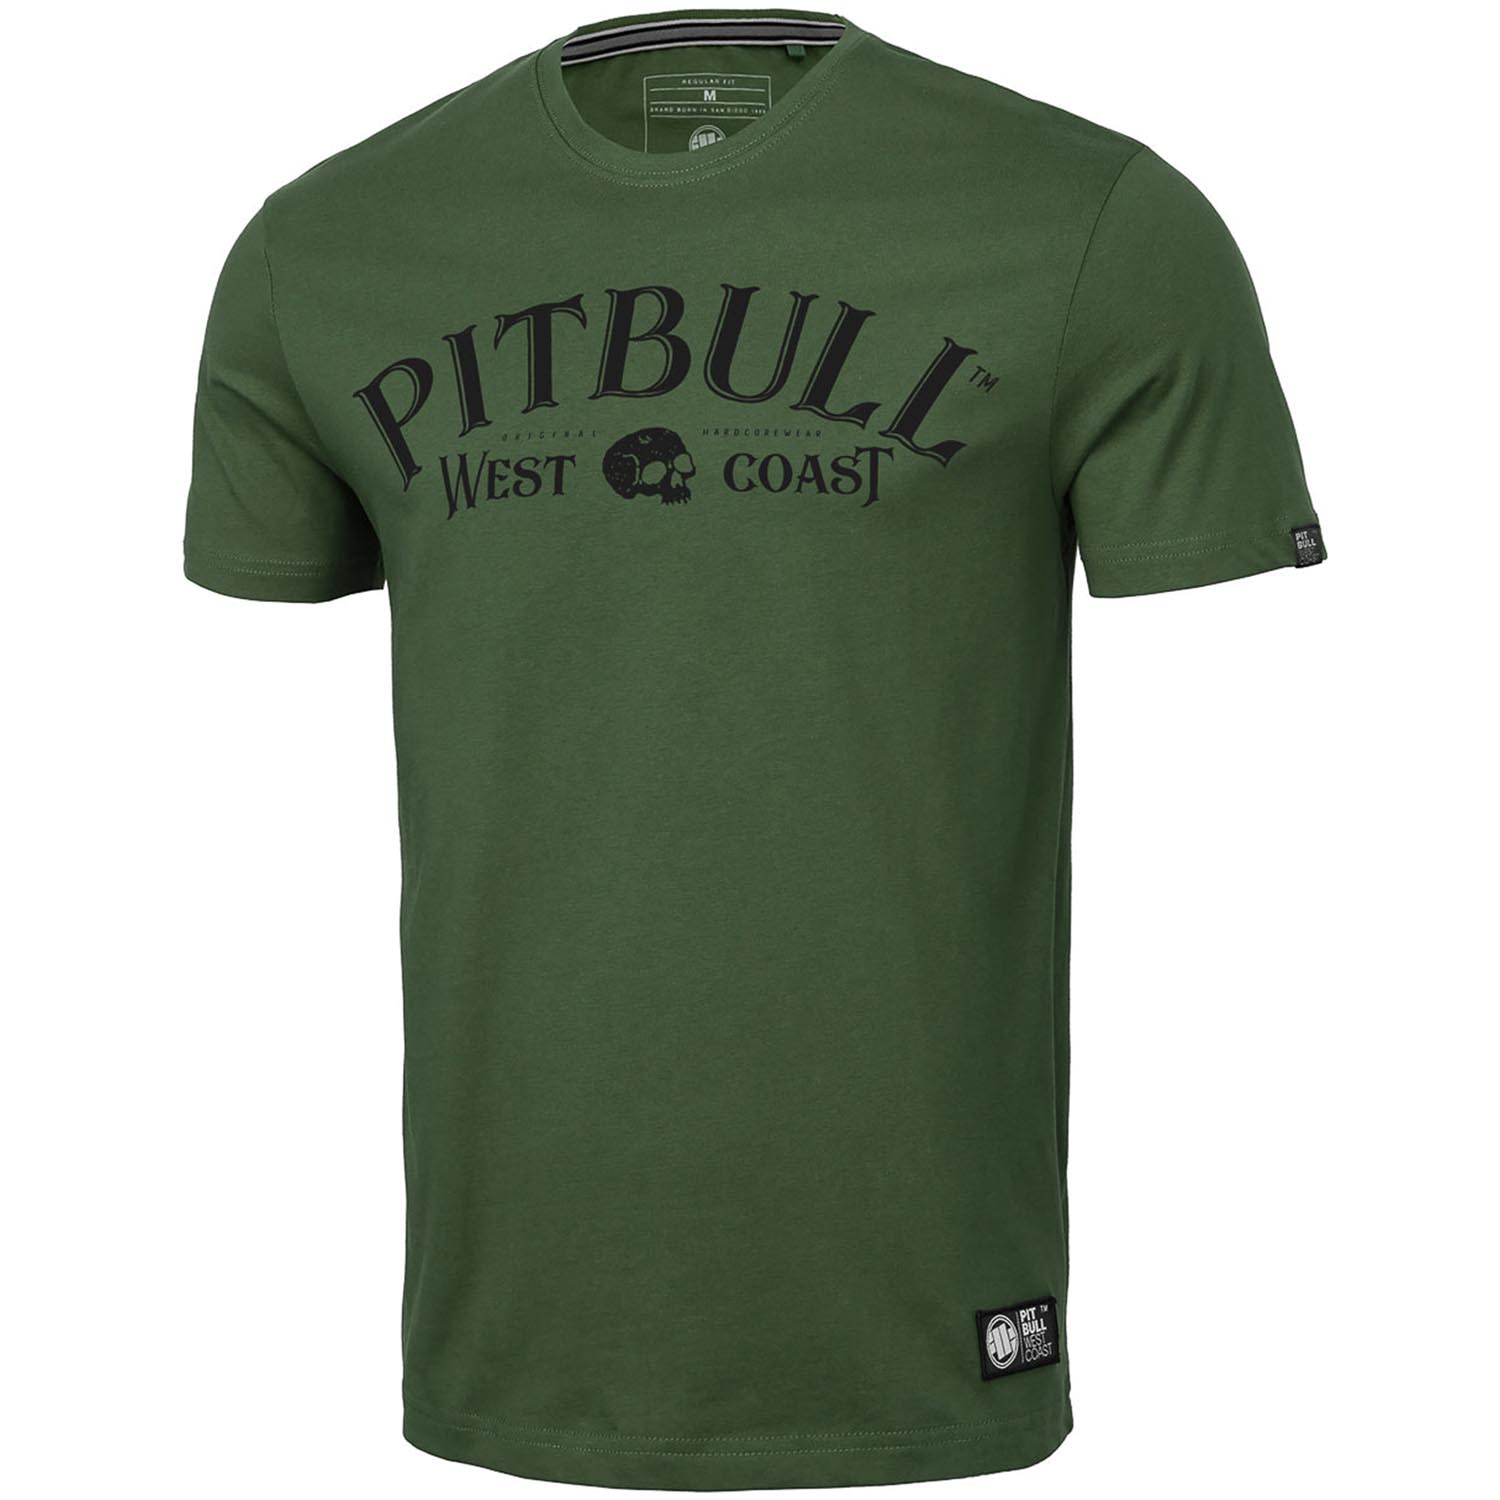 Pit Bull West Coast T-Shirt, San Diego 89, 210, olive